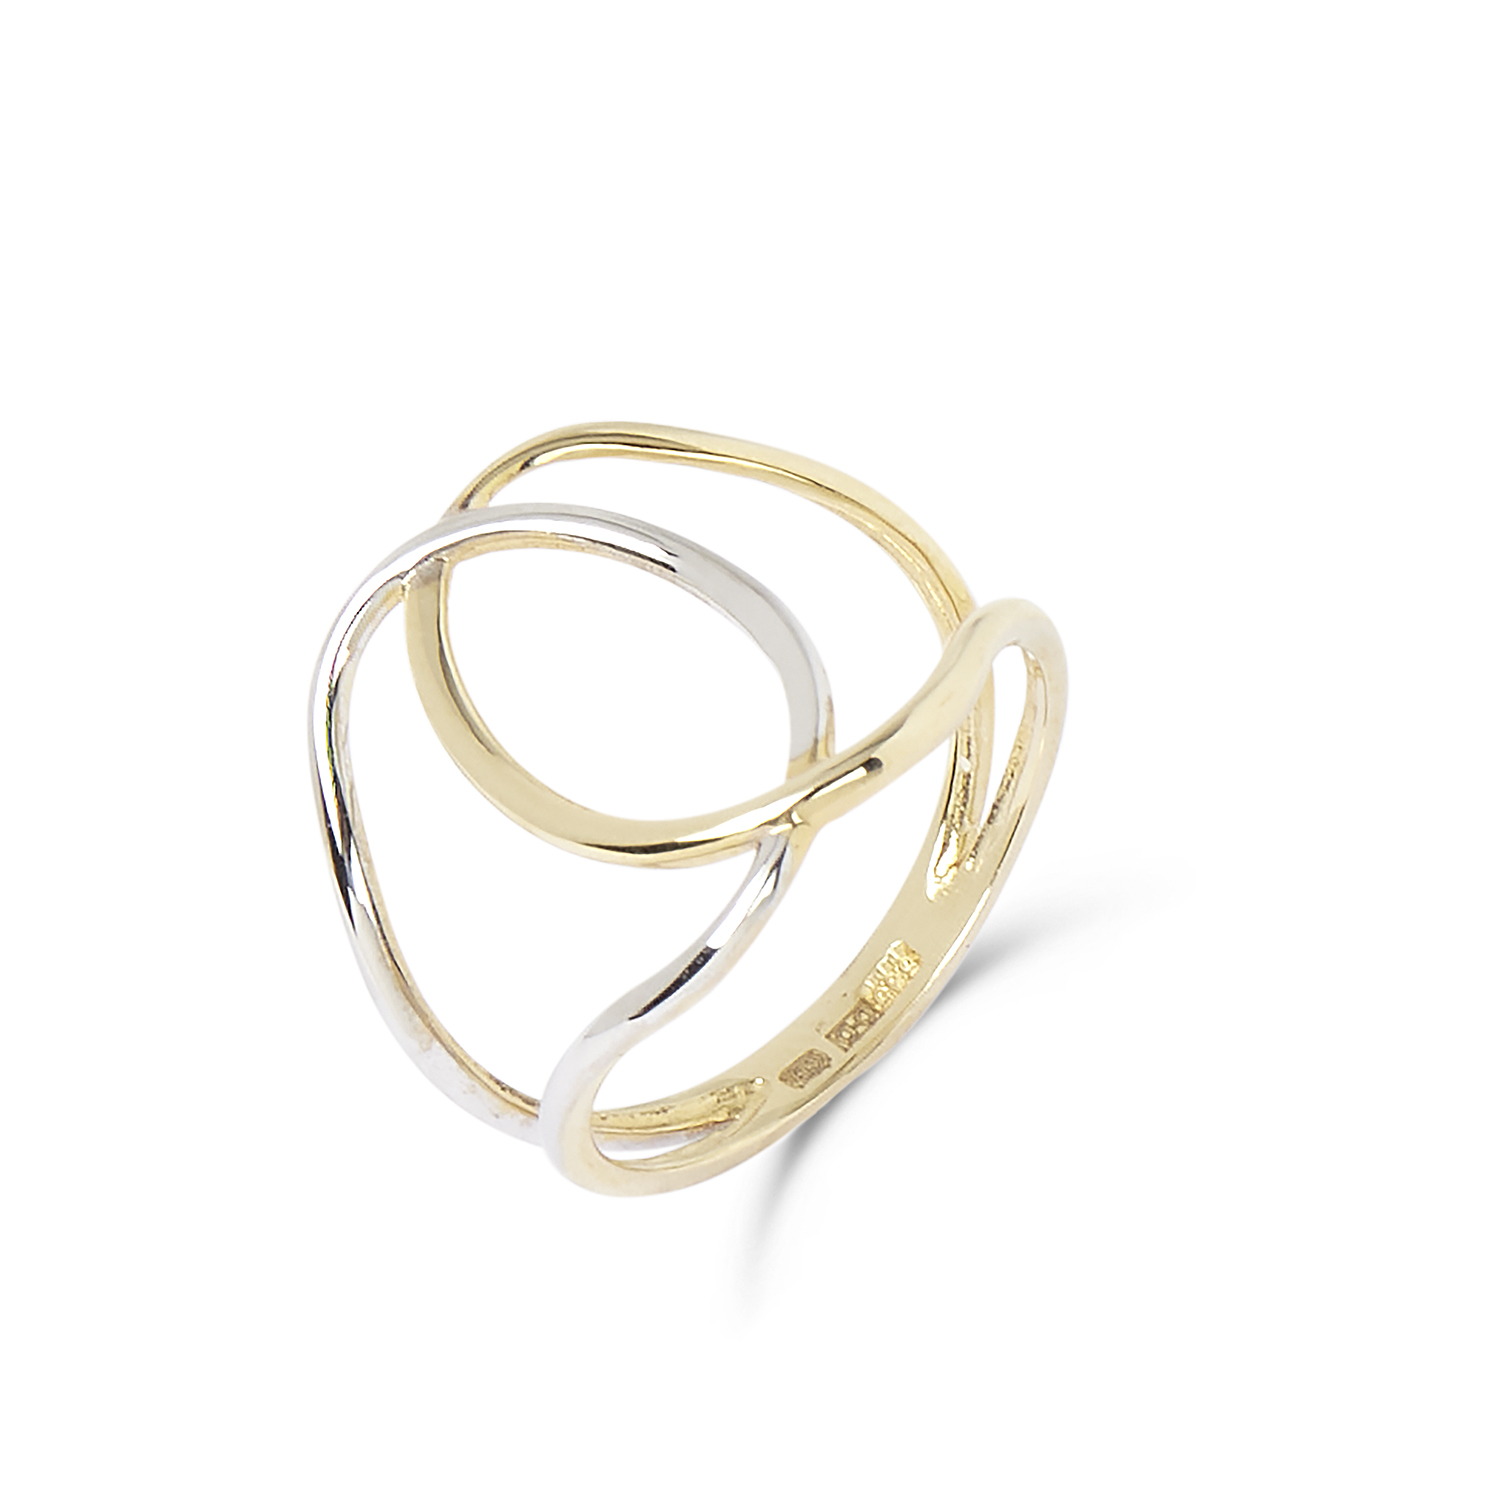 MK Jewelry ring